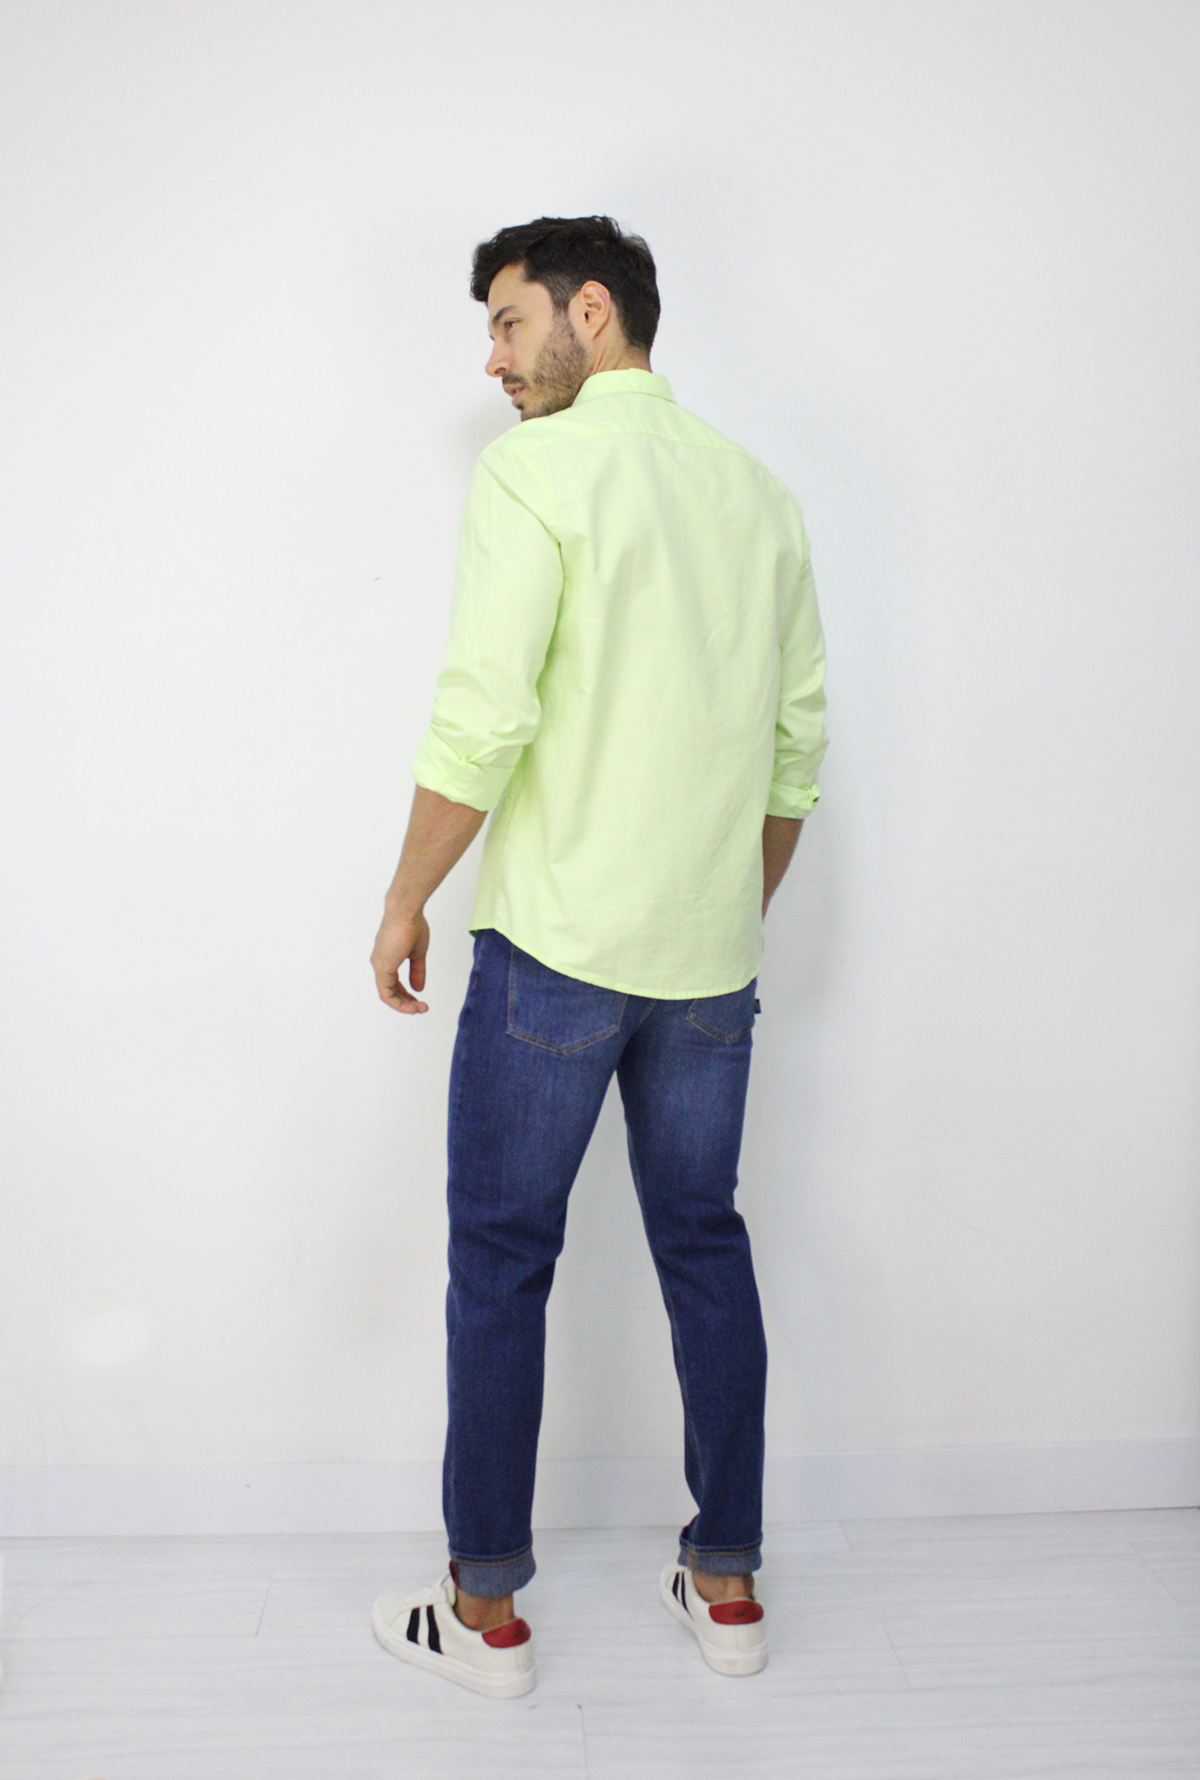 Camisa Manga Larga Oxford Verde Claro para Hombre CML3054